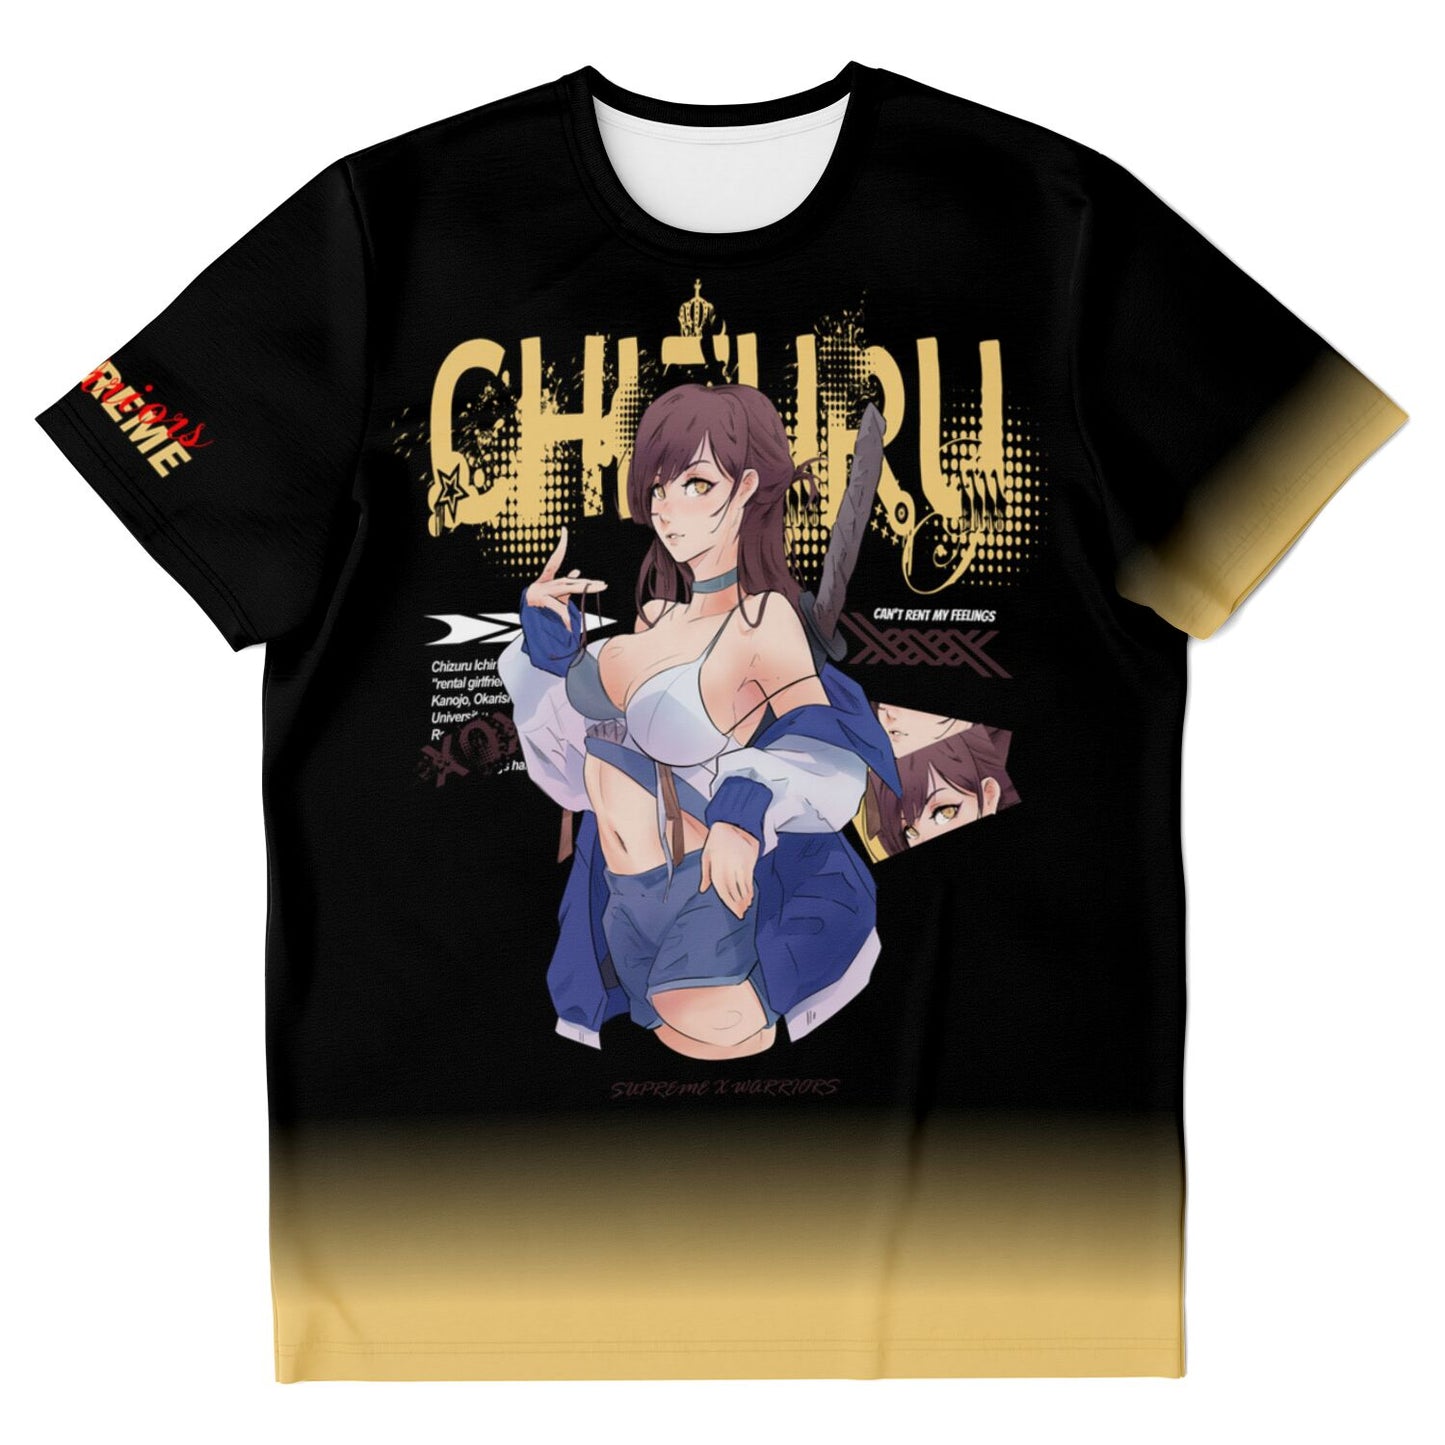 Chizuru T-shirt